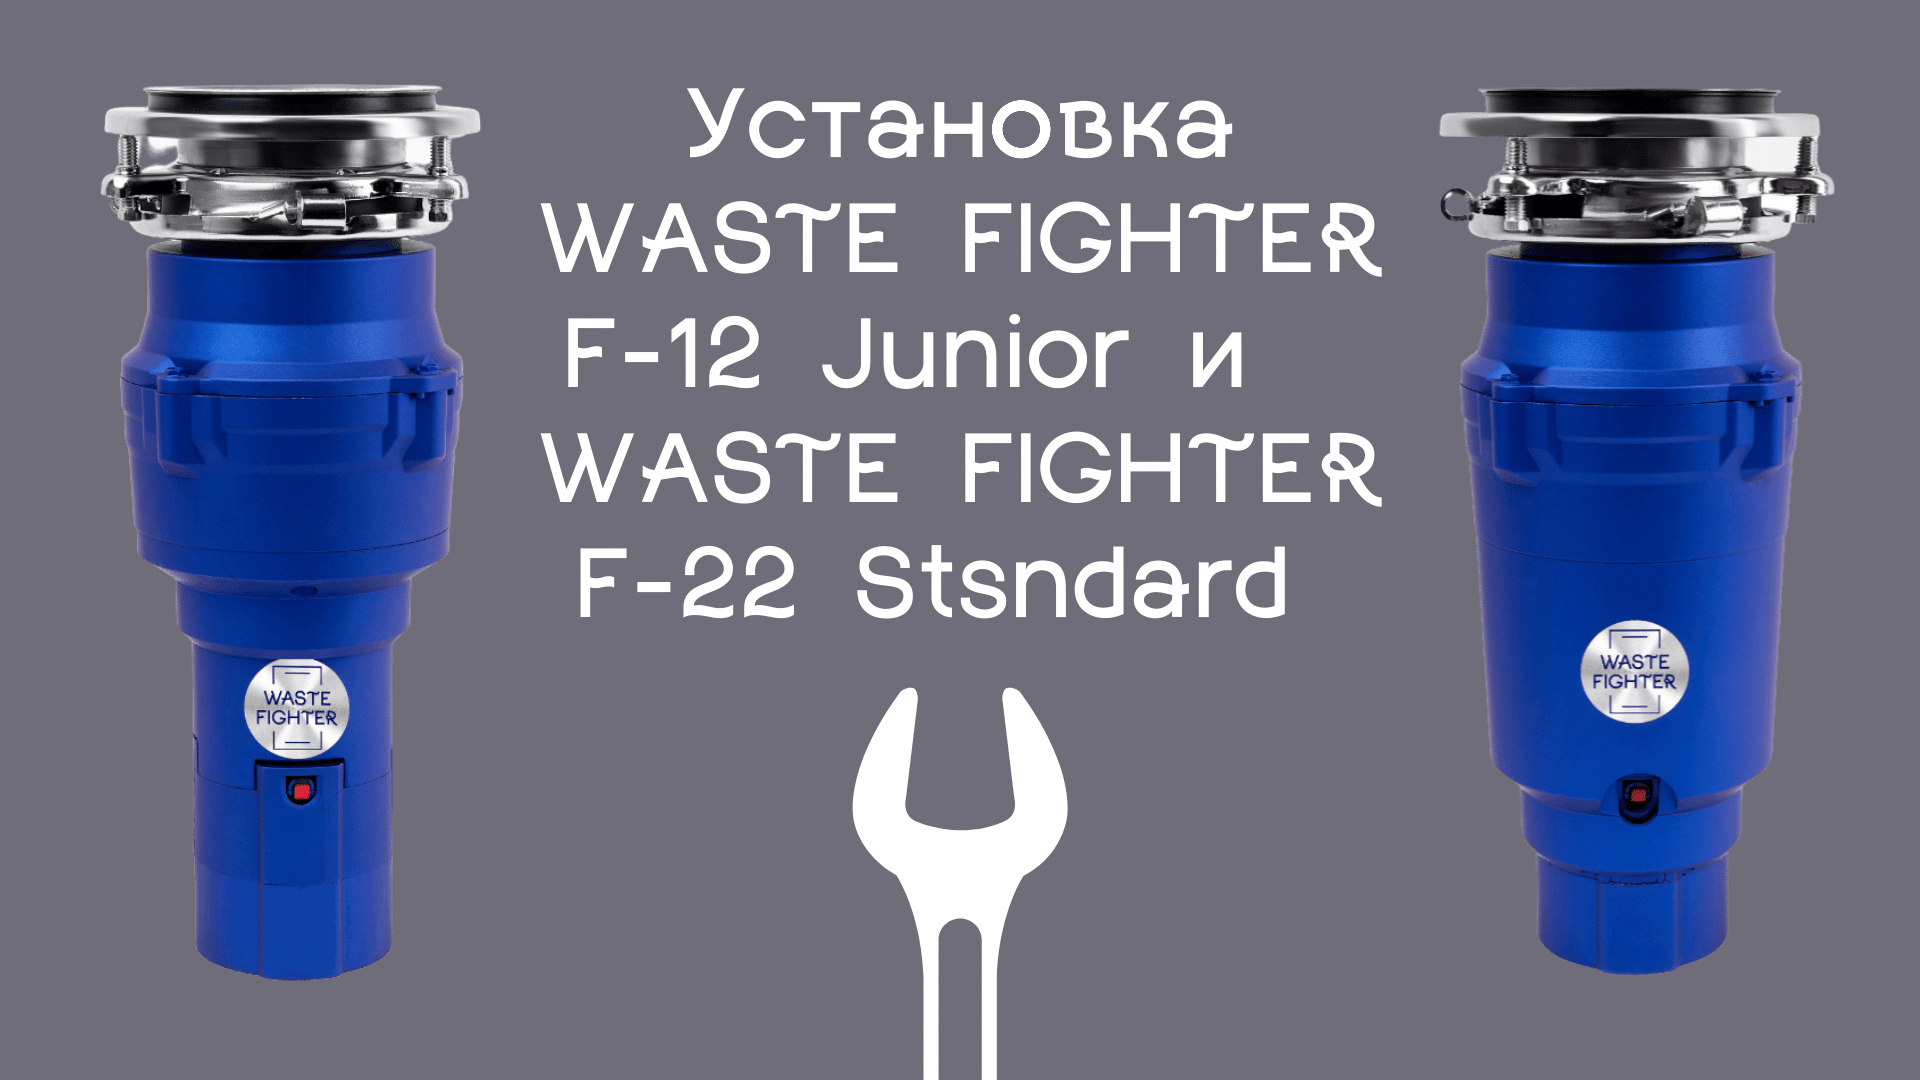 Установка WASTE FIGHTER F 12 Junior и WASTE FIGHTER F-22 Stsndard